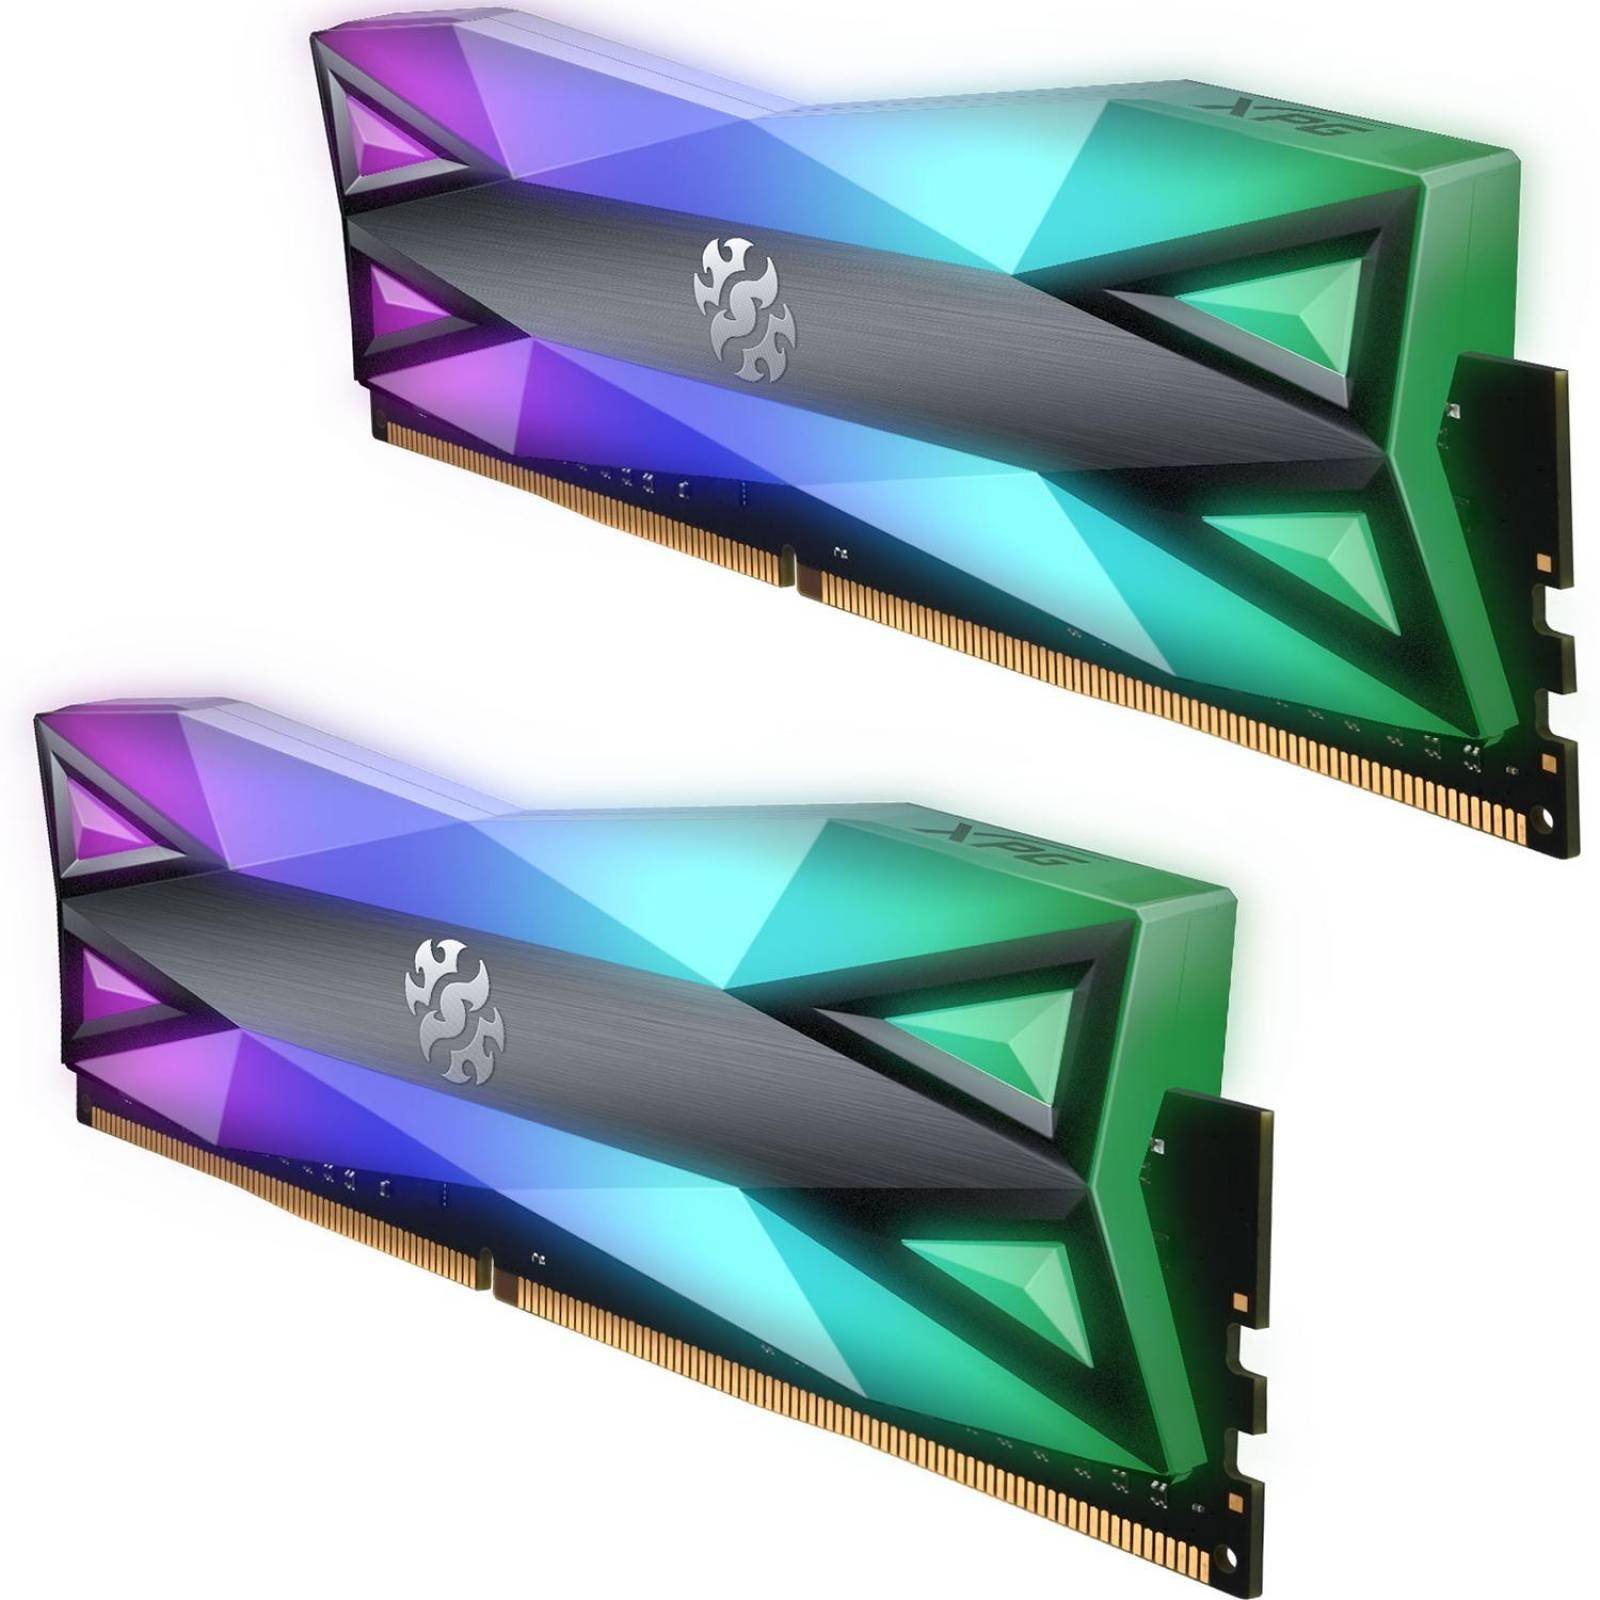 Memoria RAM DDR4 16GB 4133MHz XPG SPECTRIX D60G RGB Disipador 2x8GB AX4U413338G19J-DT60 